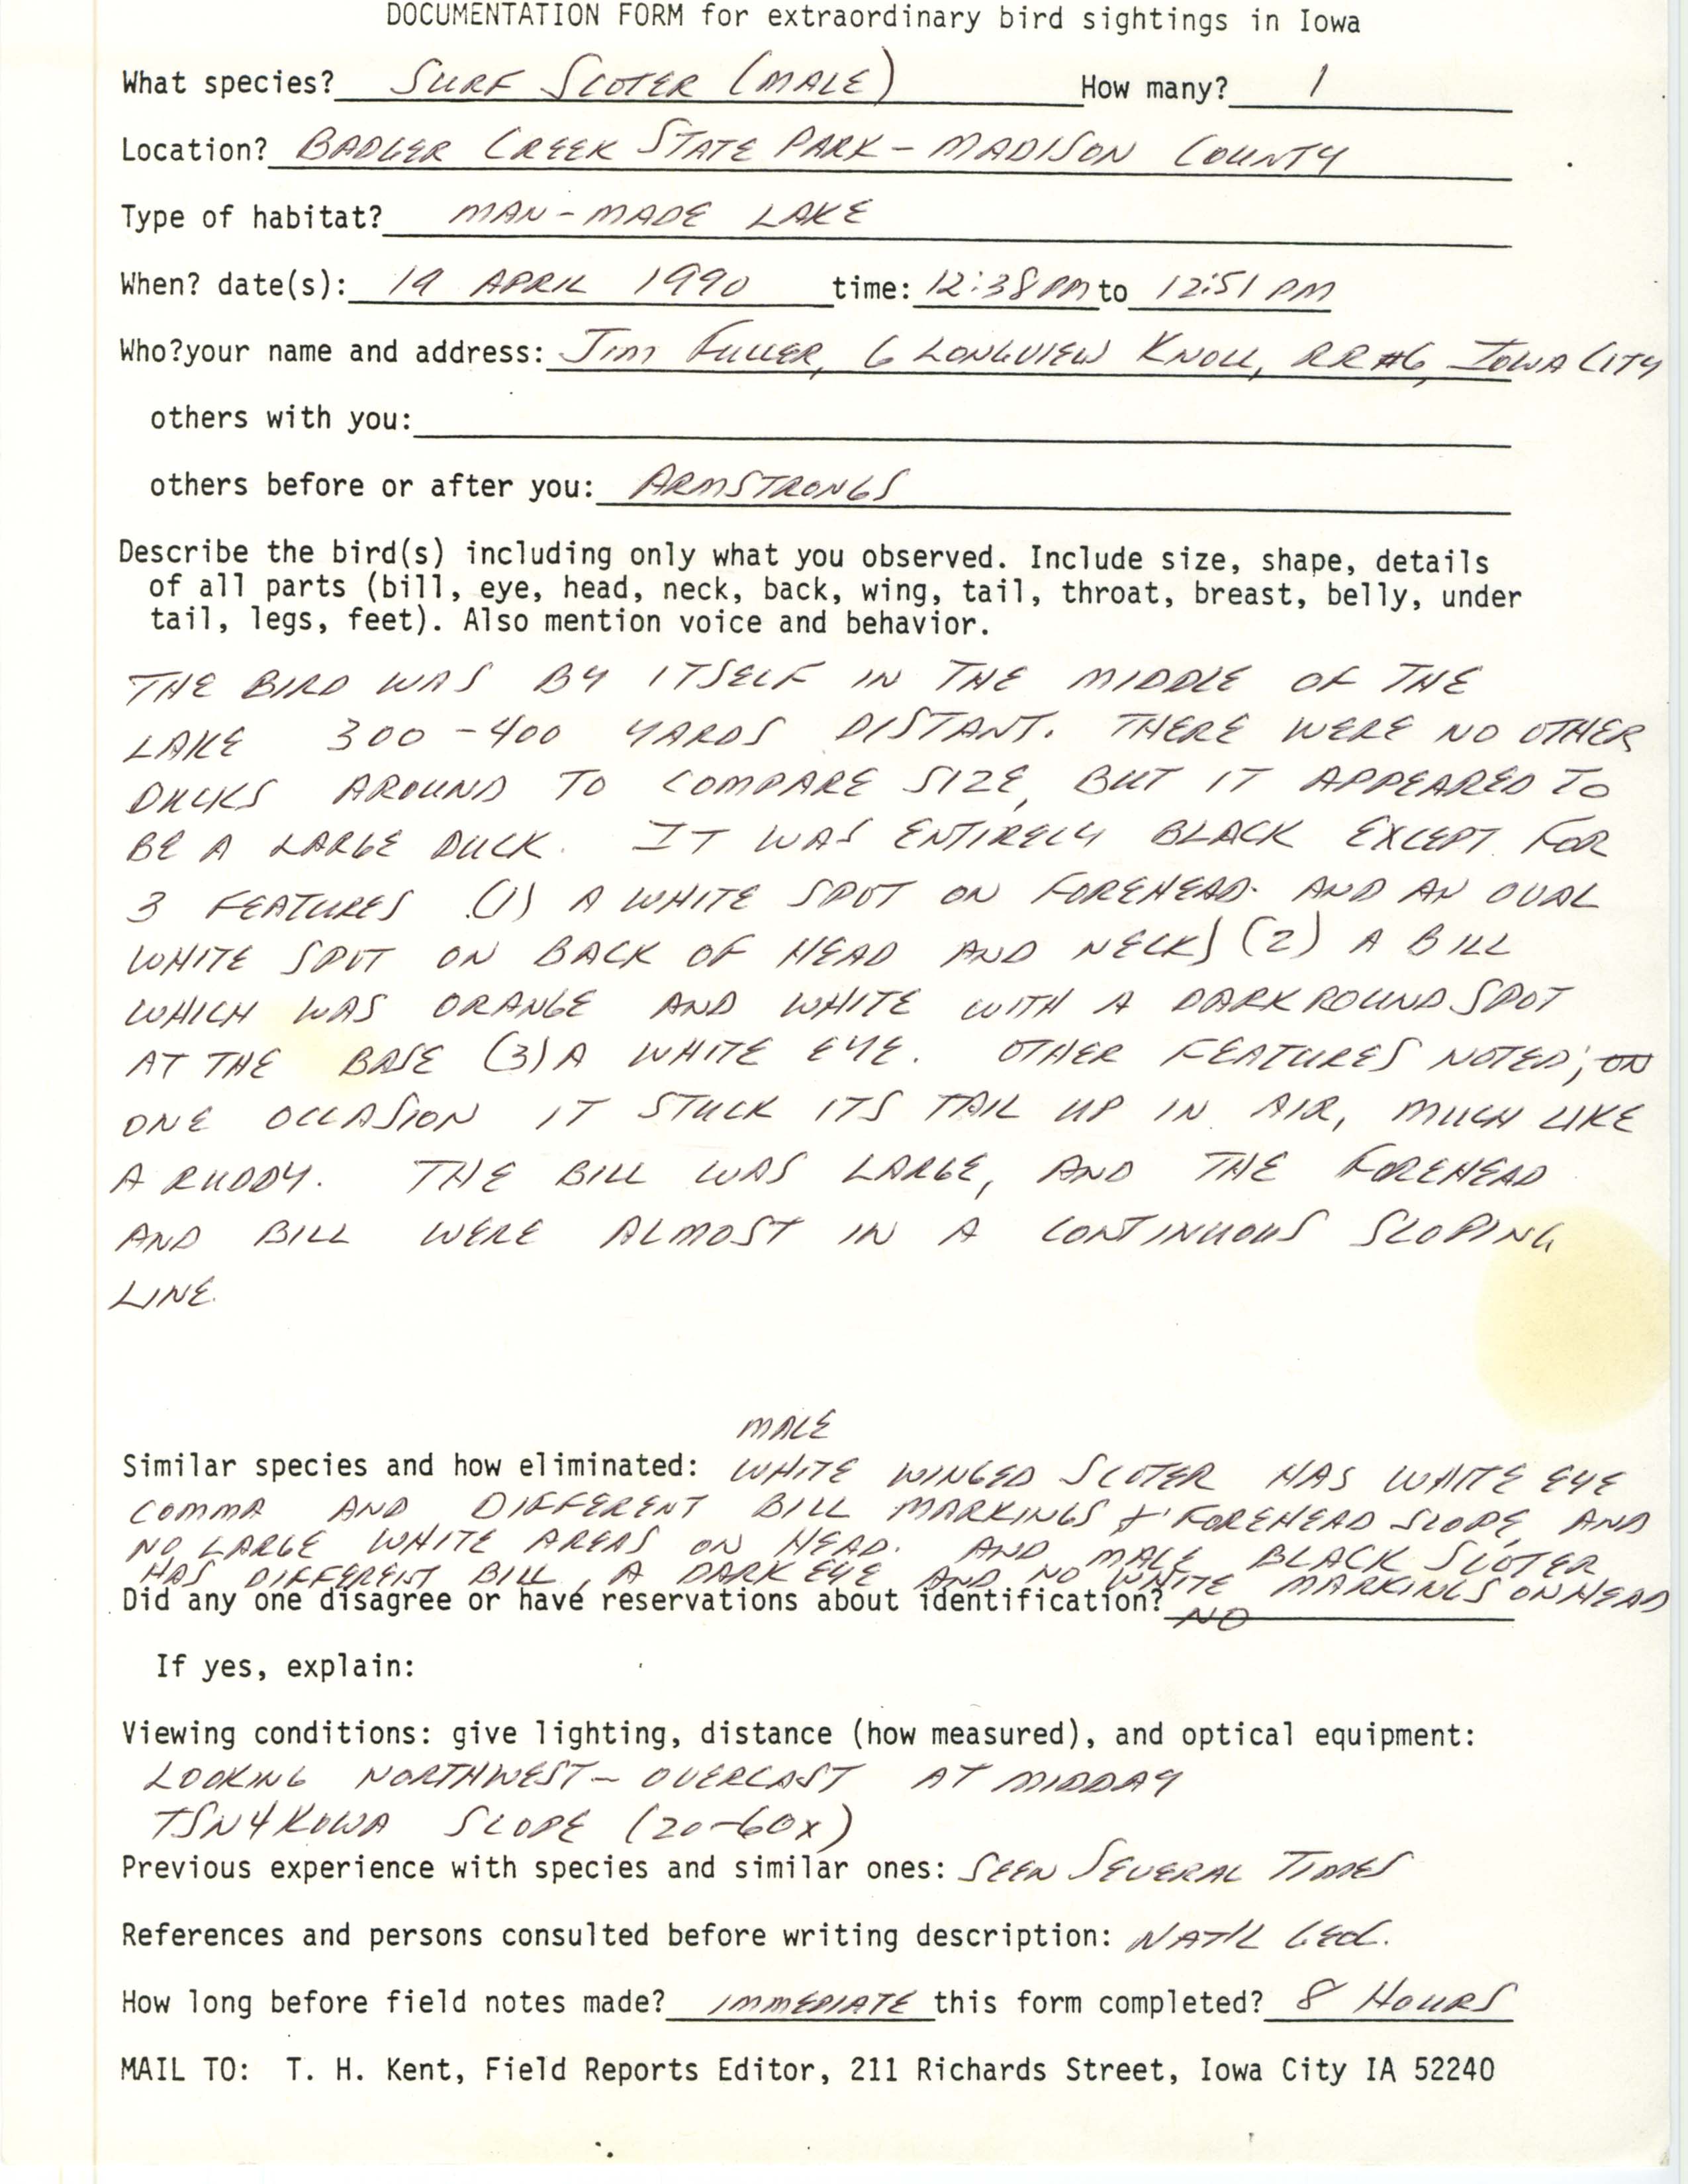 Rare bird documentation form for Surf Scoter at Badger Creek State Park, 1990